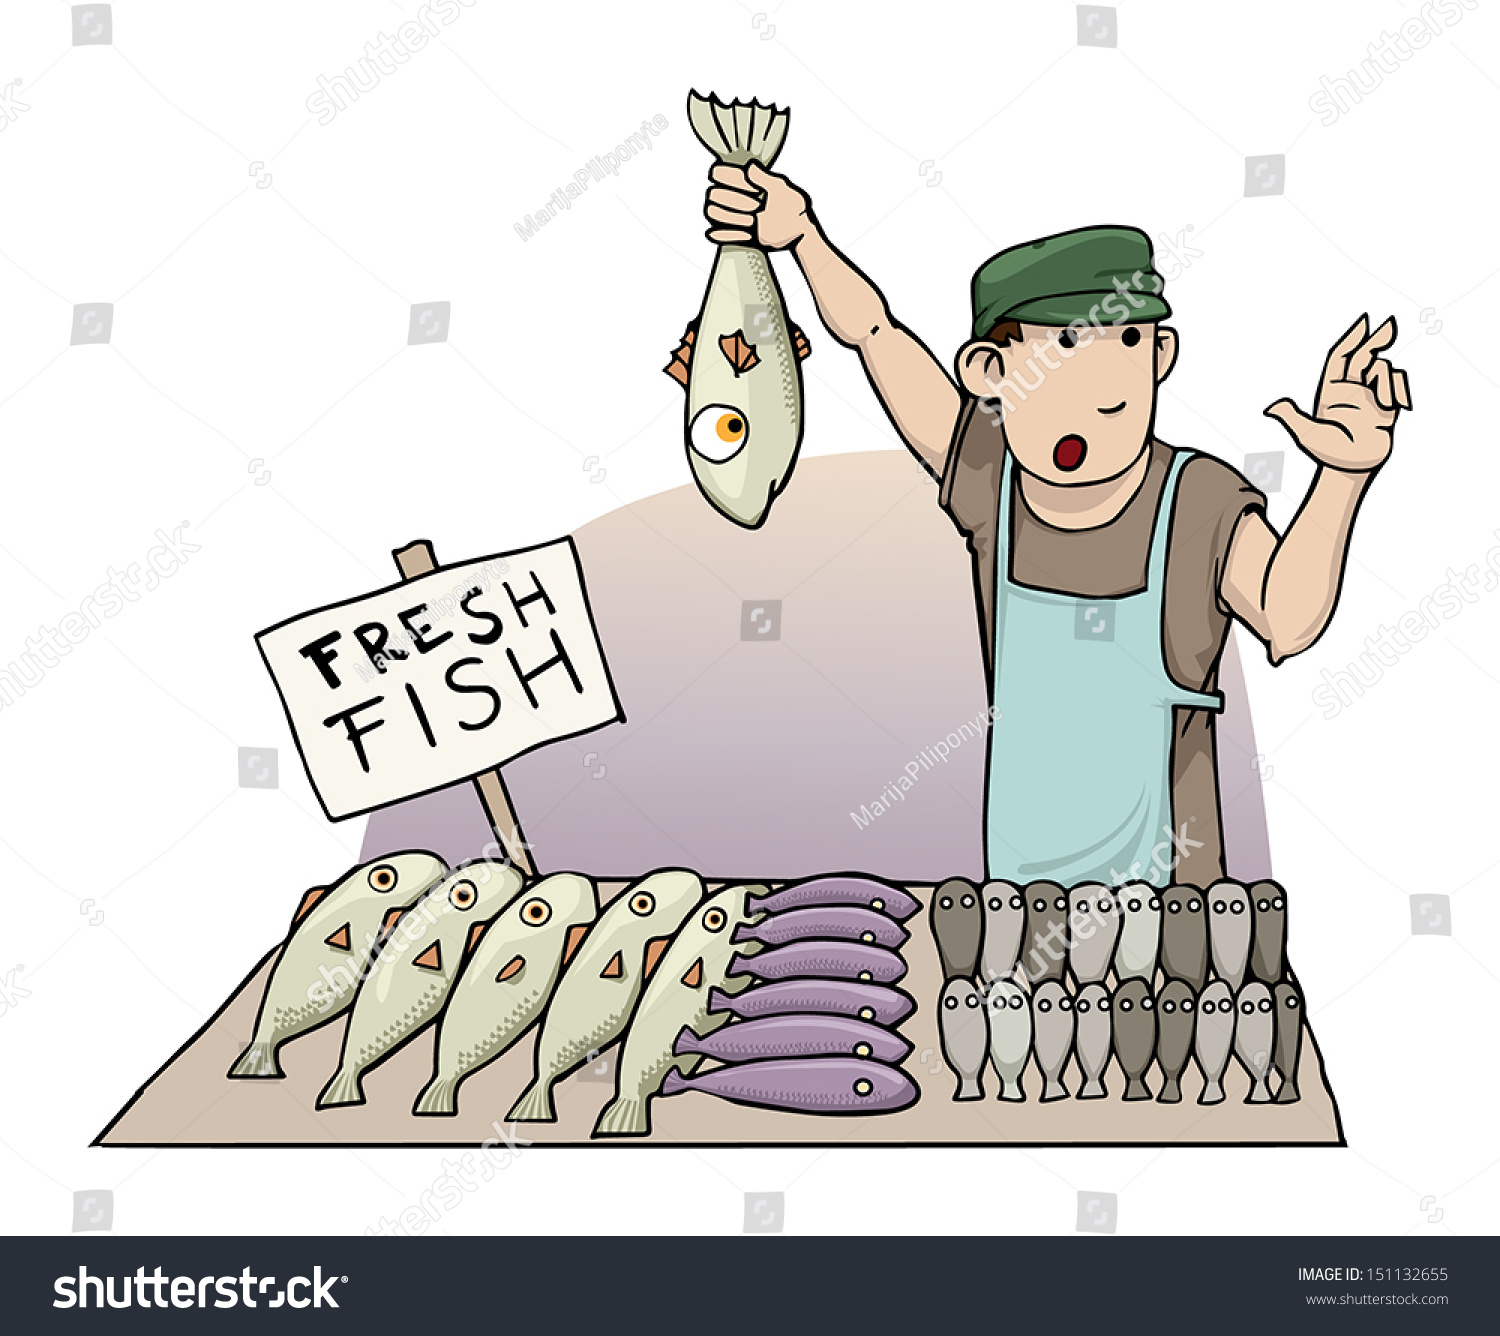 fish vendor clipart - photo #3